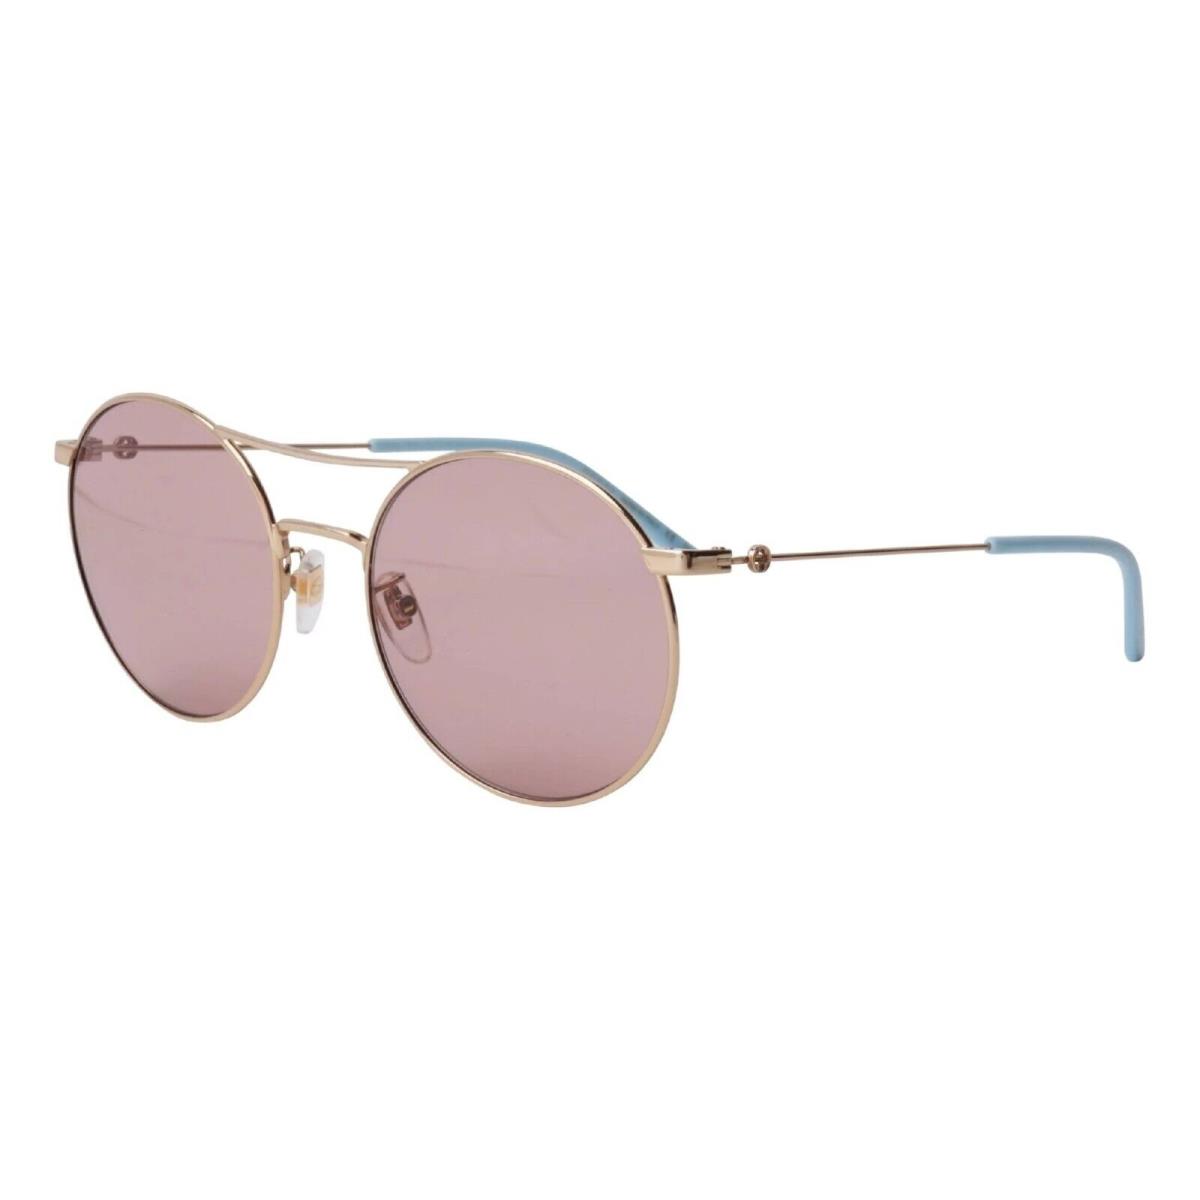 Gucci Sunglasses GG0680S 004 Gold/pink Lens Fashion Design 56mm